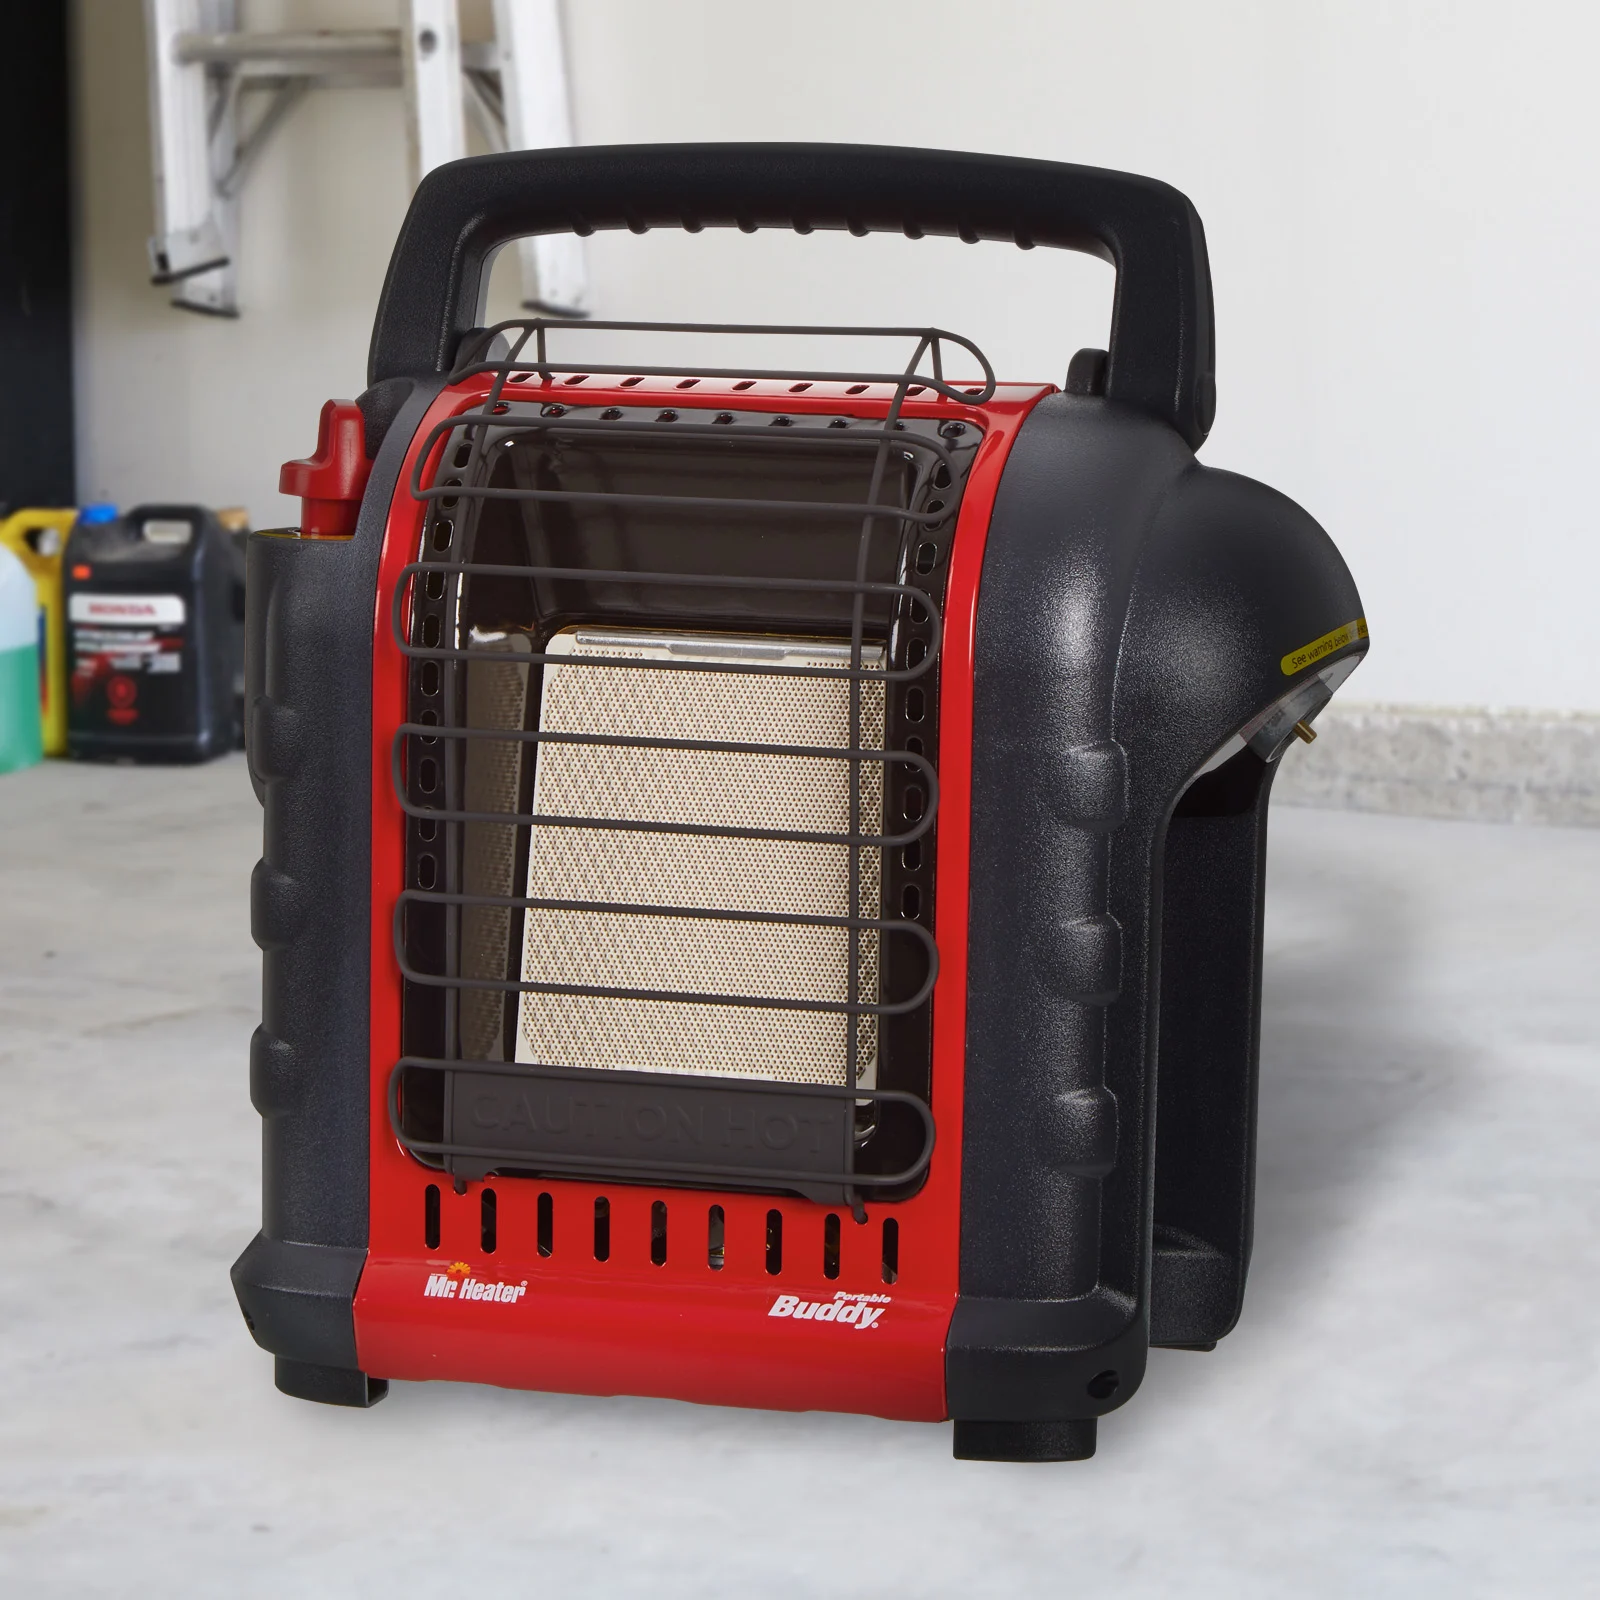 A portable garage heater